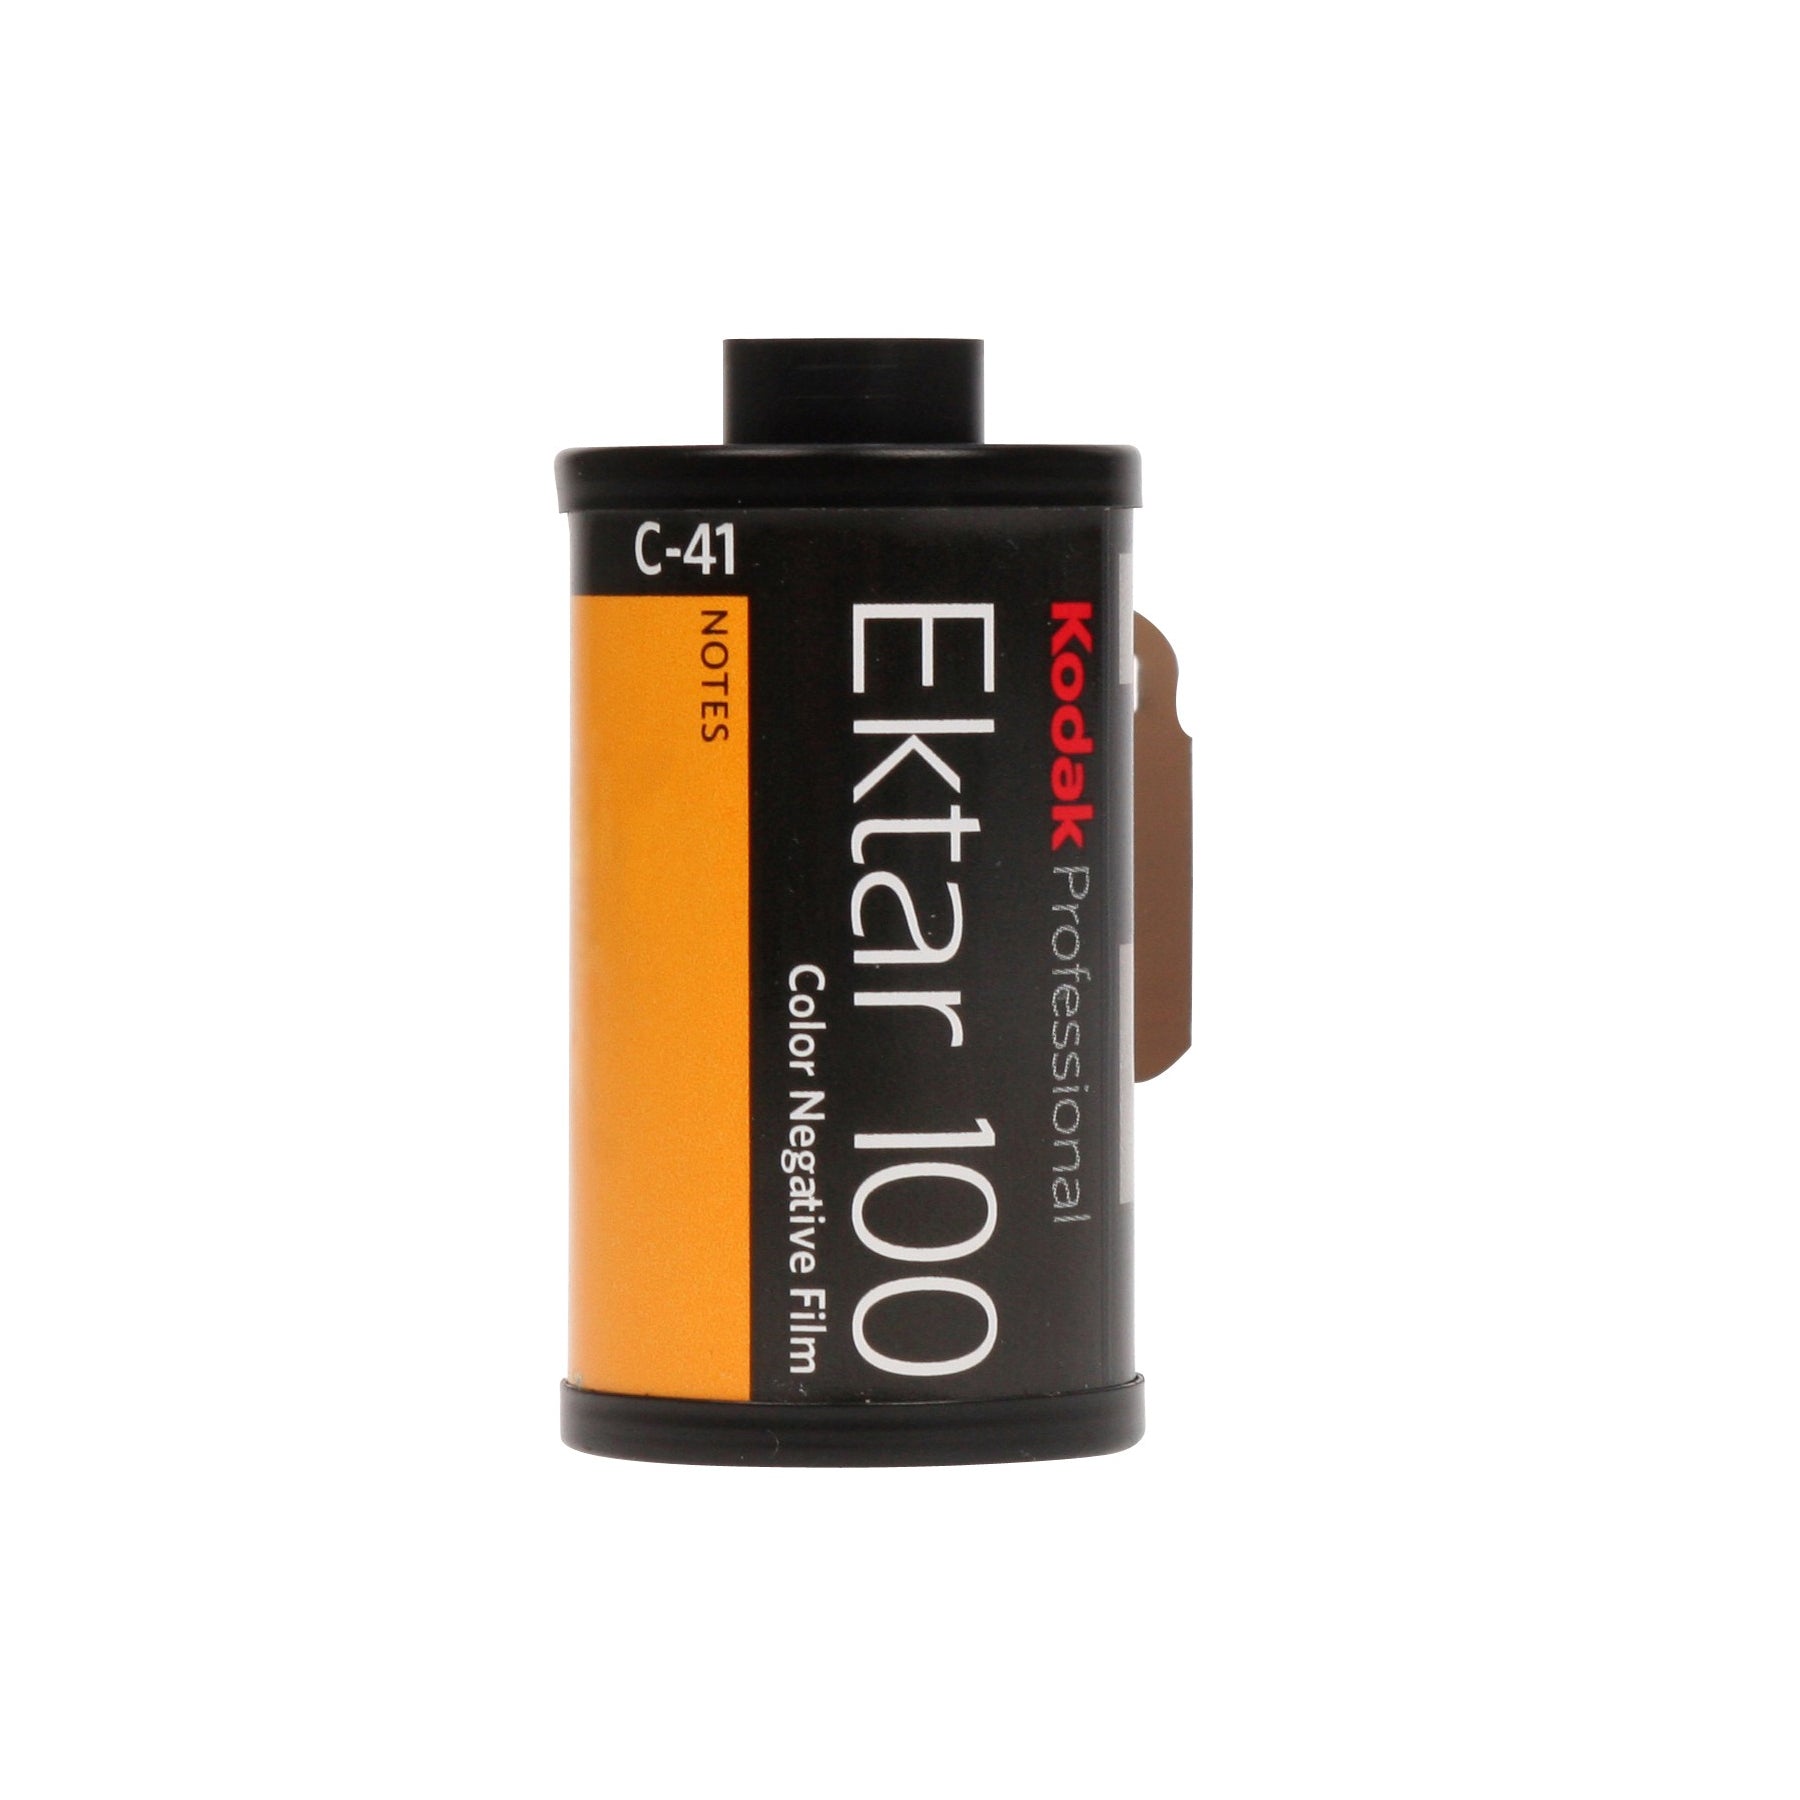 Kodak Ektar 100 Professional - 35mm